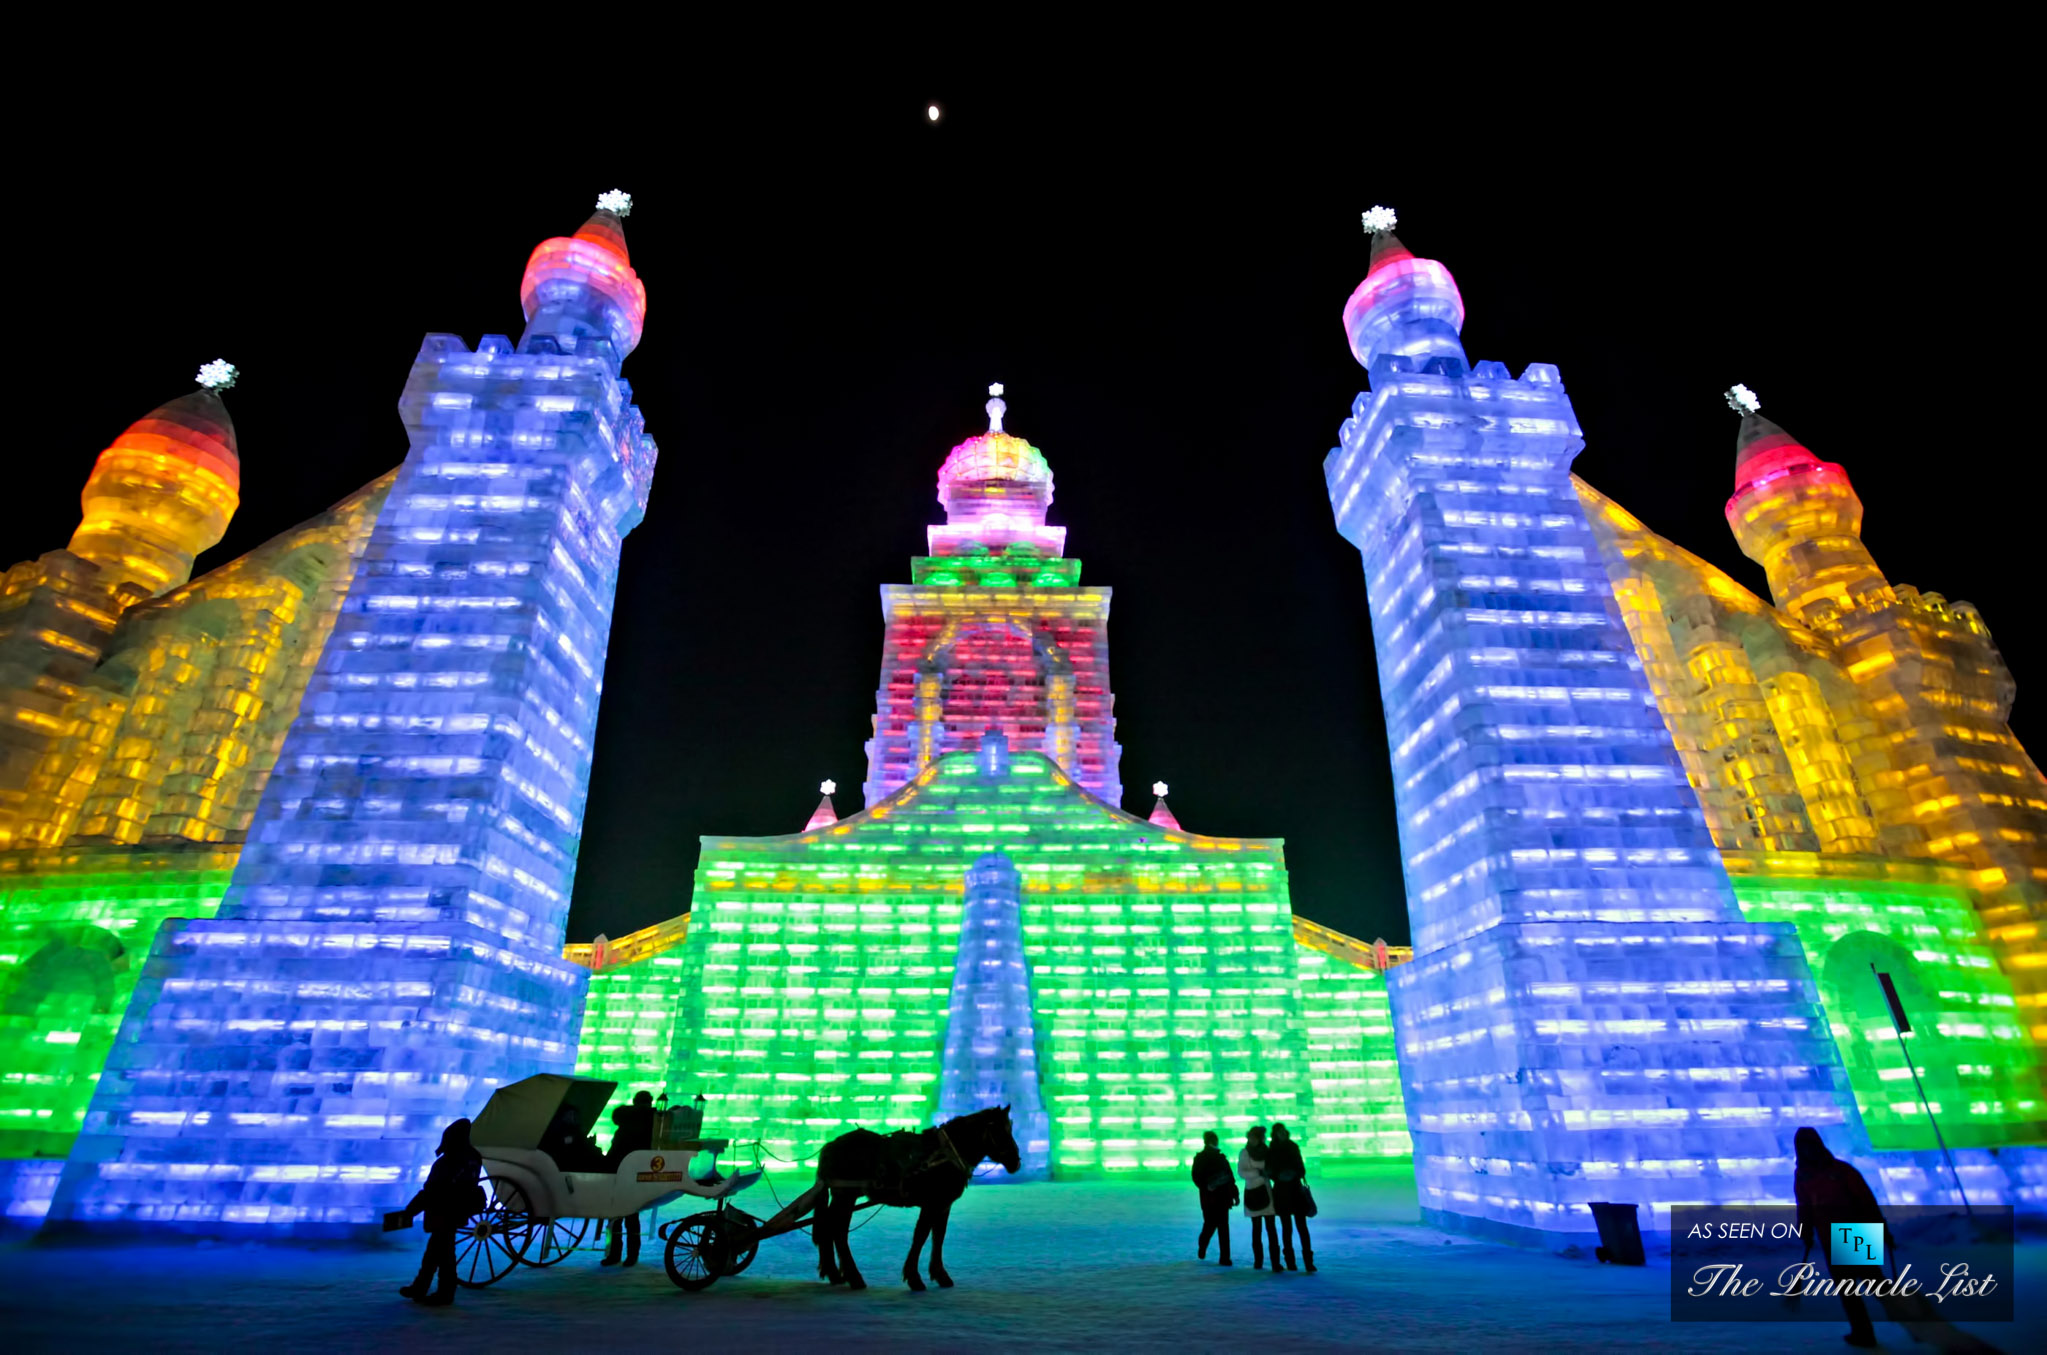 Harbin International Snow and Ice Festival - An Illuminated Awe-Inspiring Winter Wonderland in China